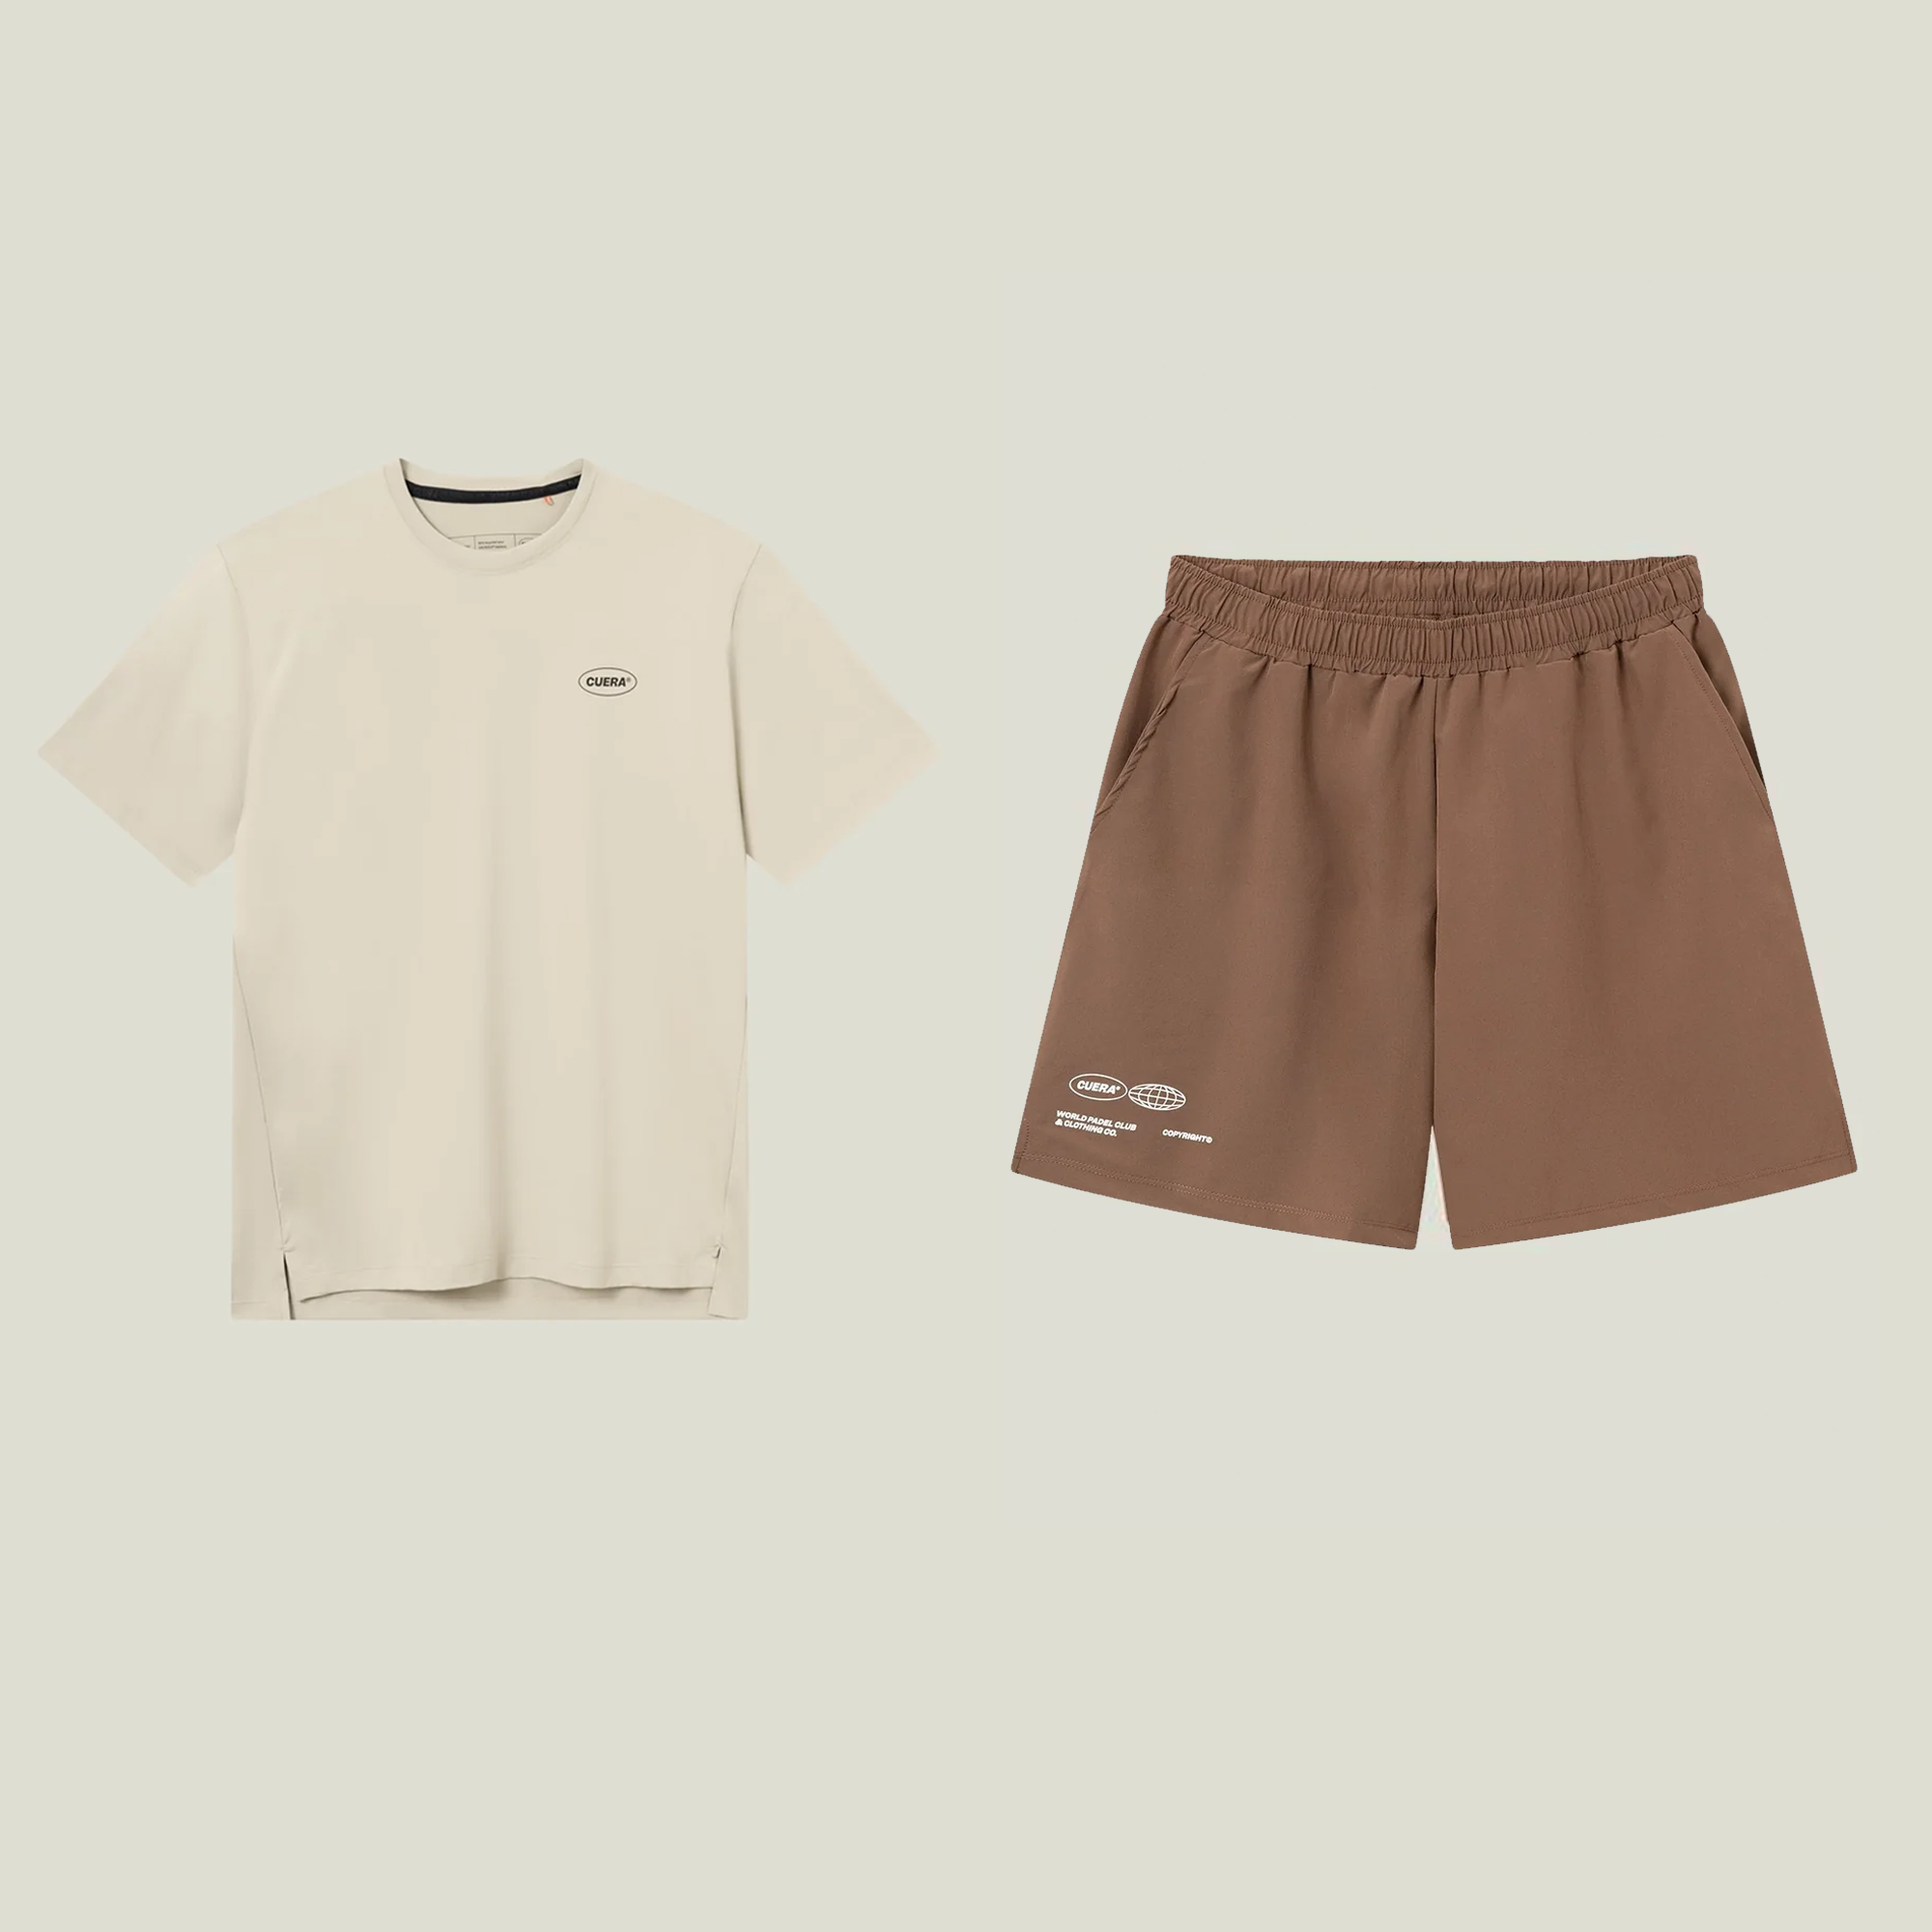 Oncourt Shorts & T-shirt - Grey & Brown Bundle